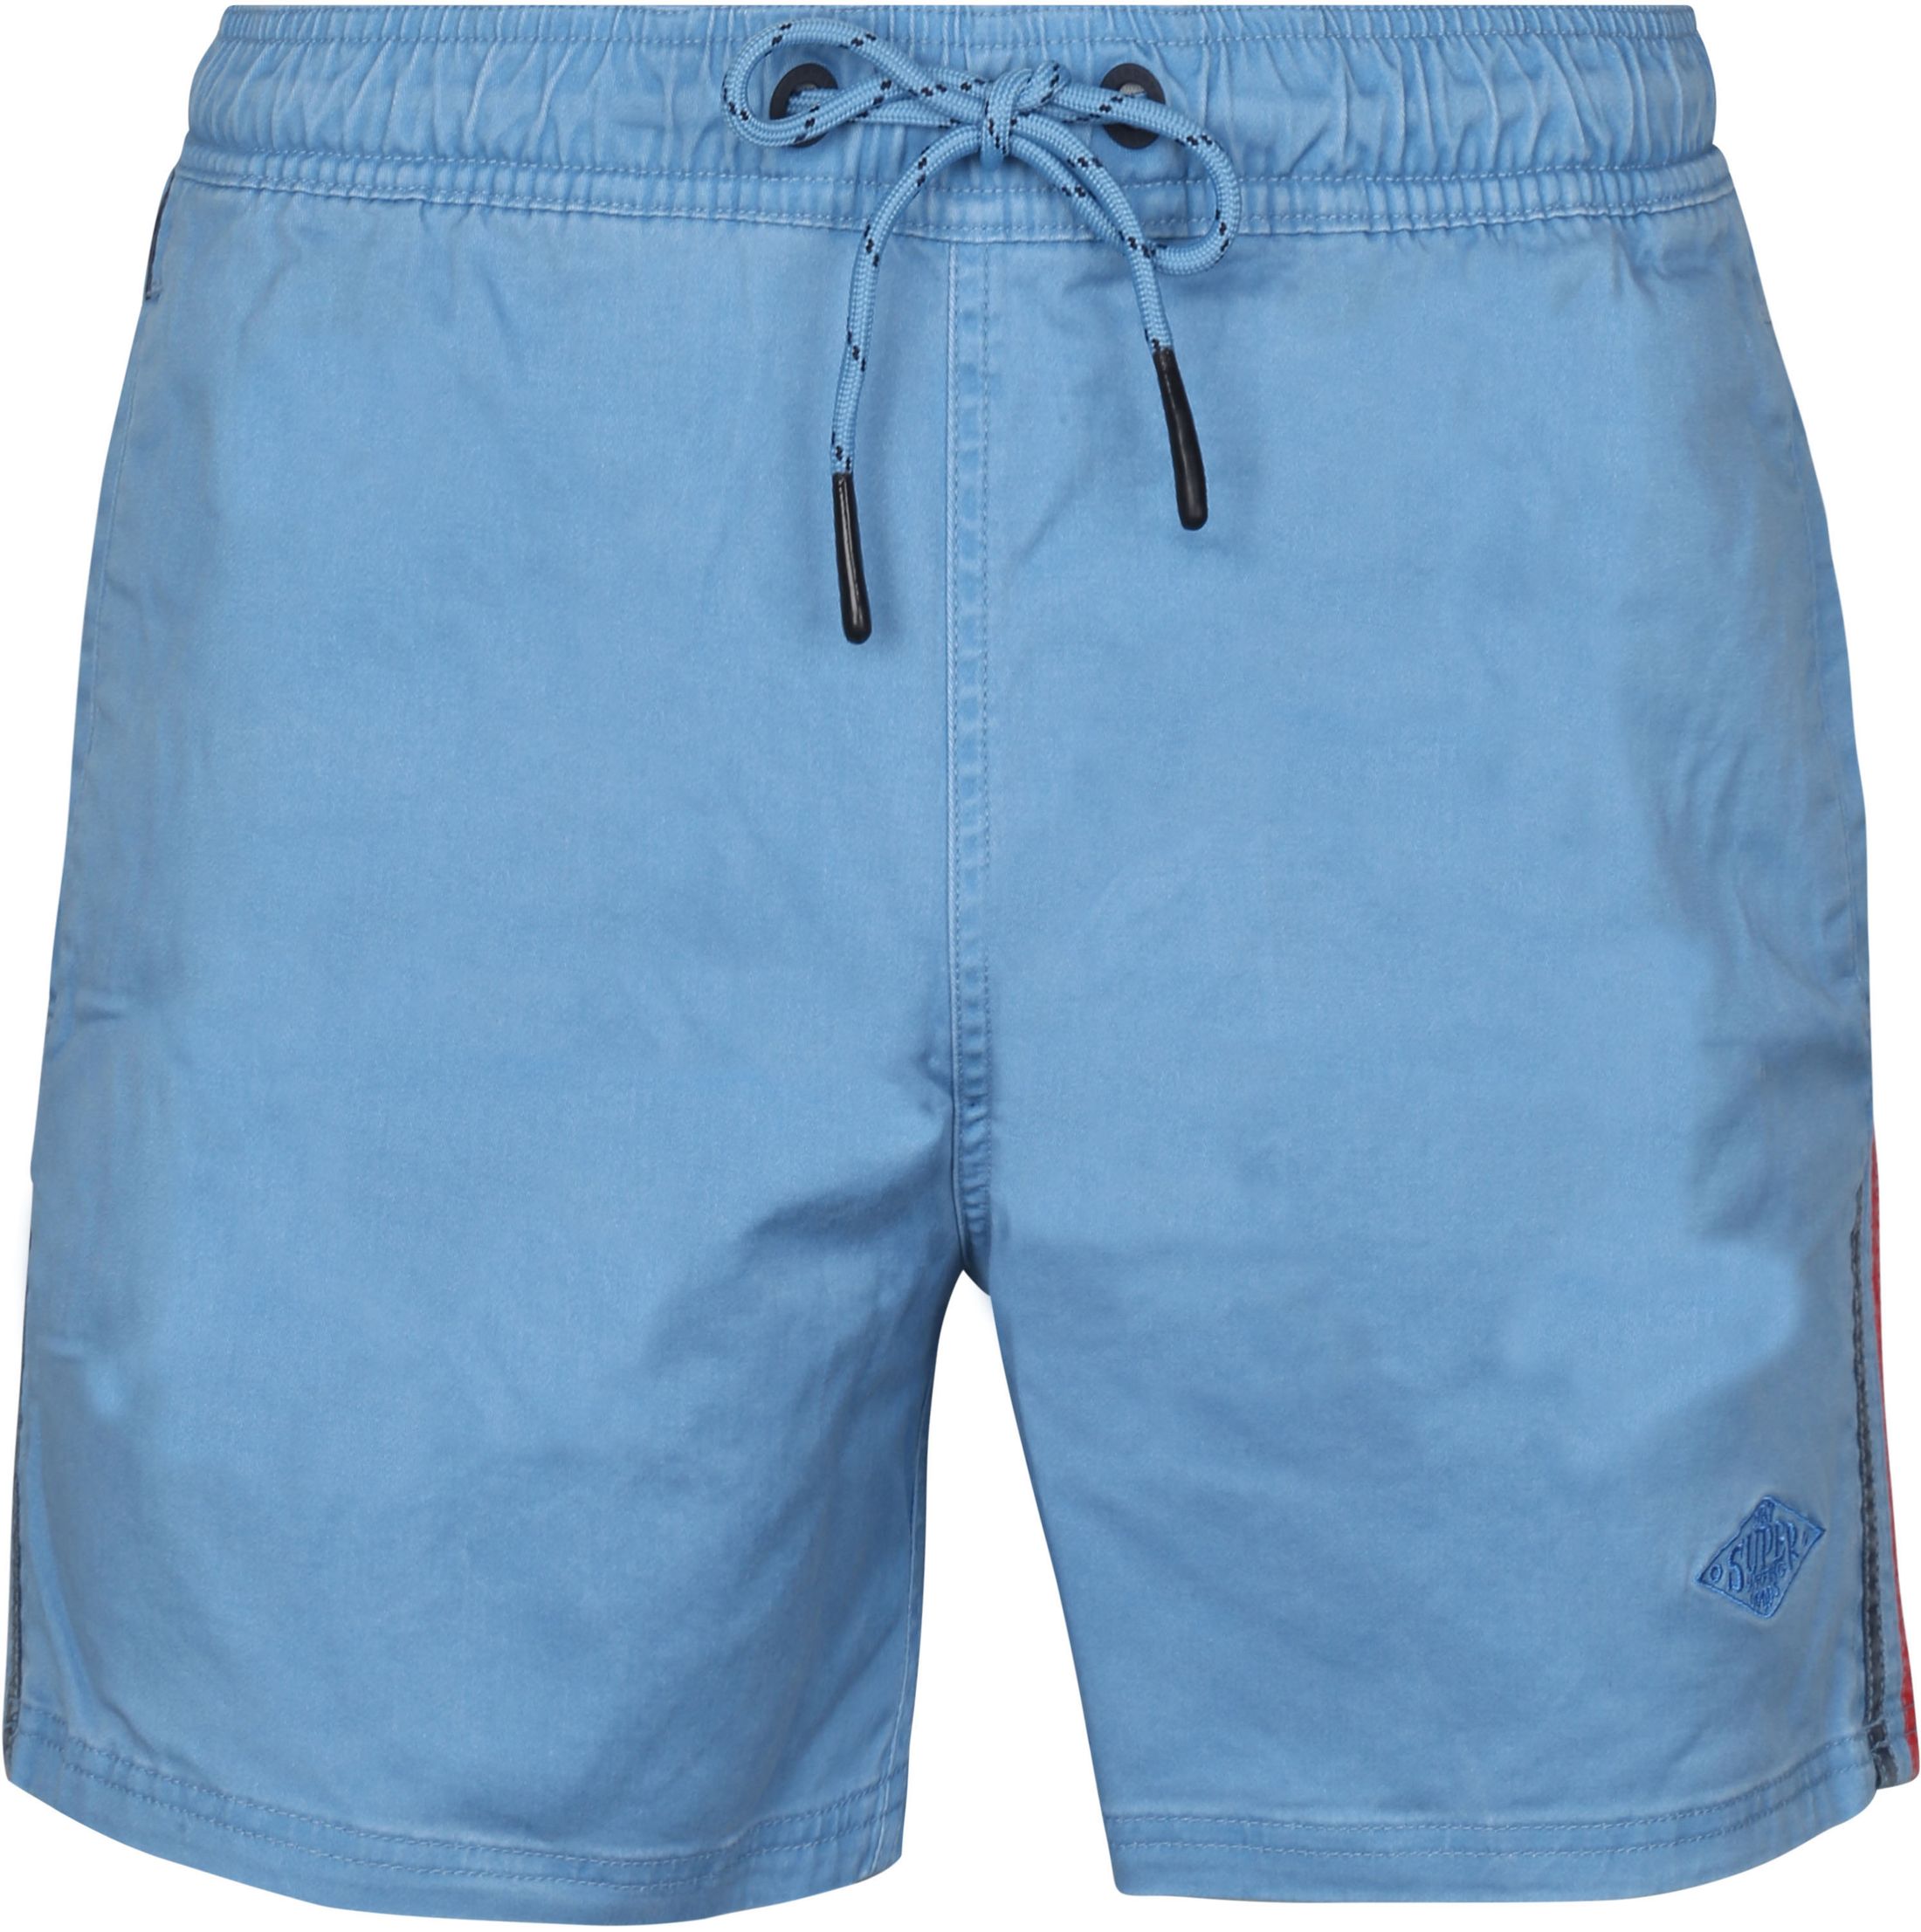 Superdry Vintage Stripe Shorts Light Light blue Blue size L